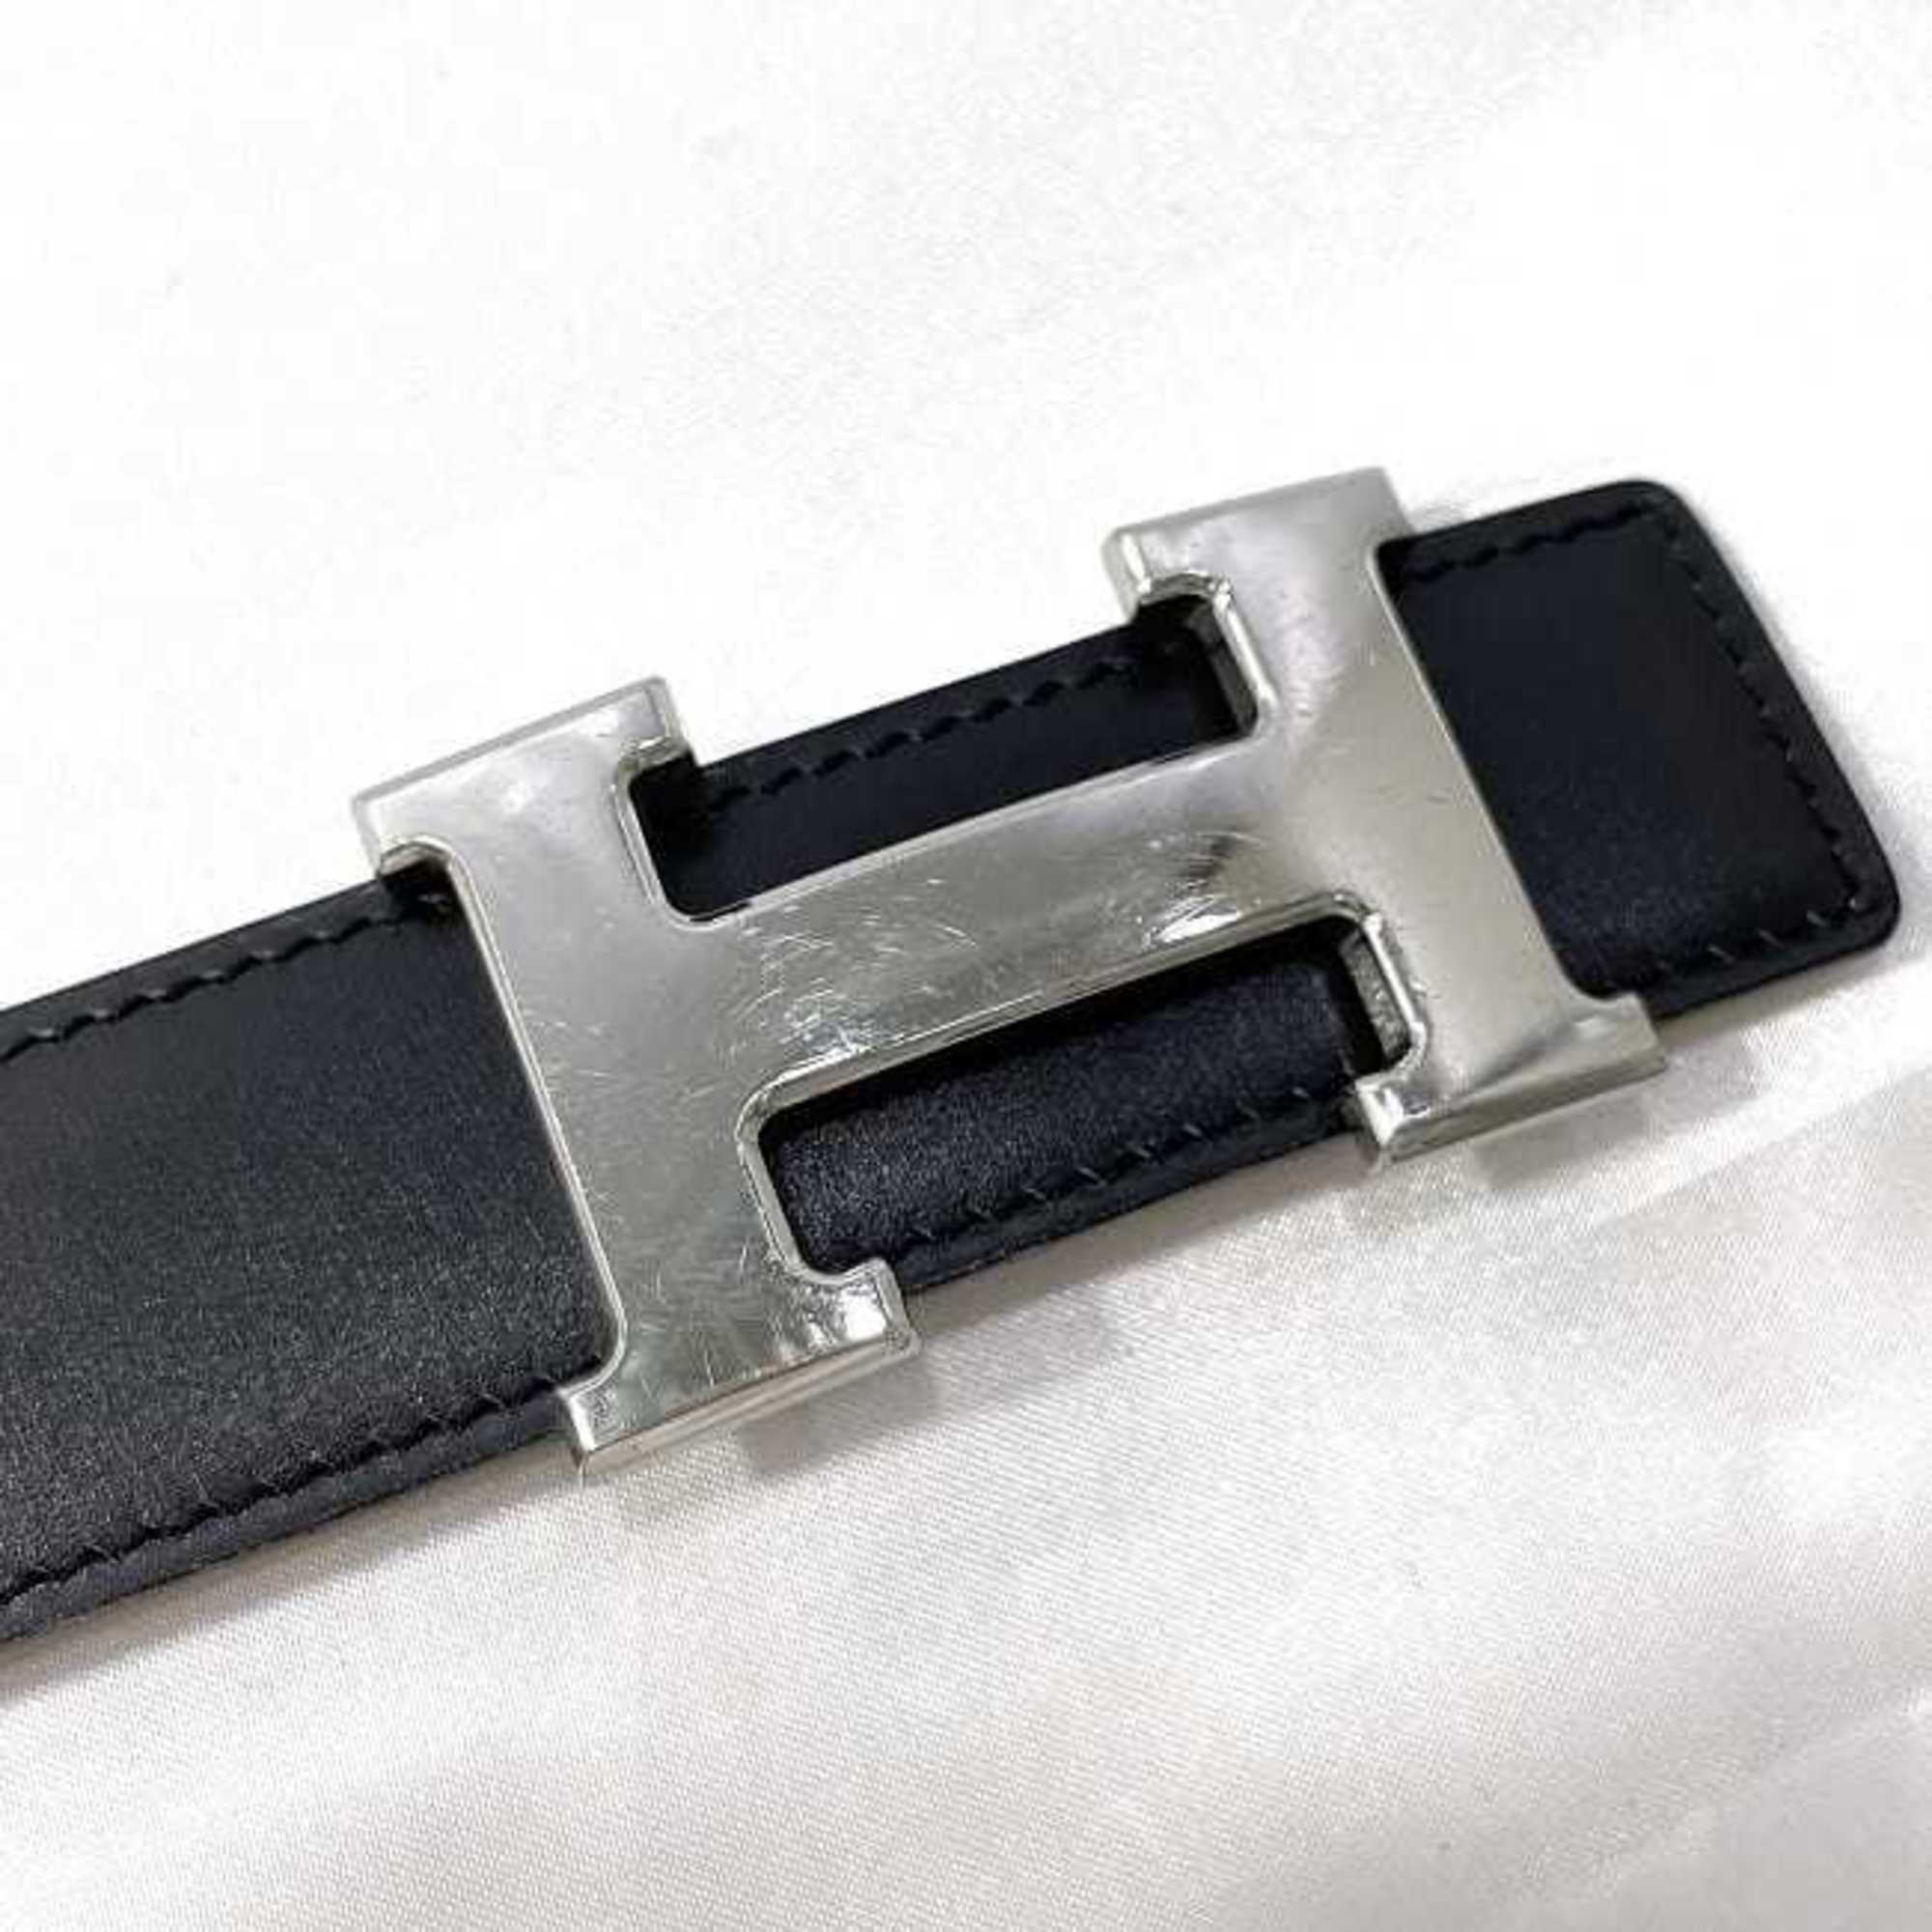 Hermes H-belt Black Camel Constance ec-19965 Waist belt Leather Box calf □G engraved HERMES Reversible 31mm Buckle Men's Women's Brown 70cm Made in 2003